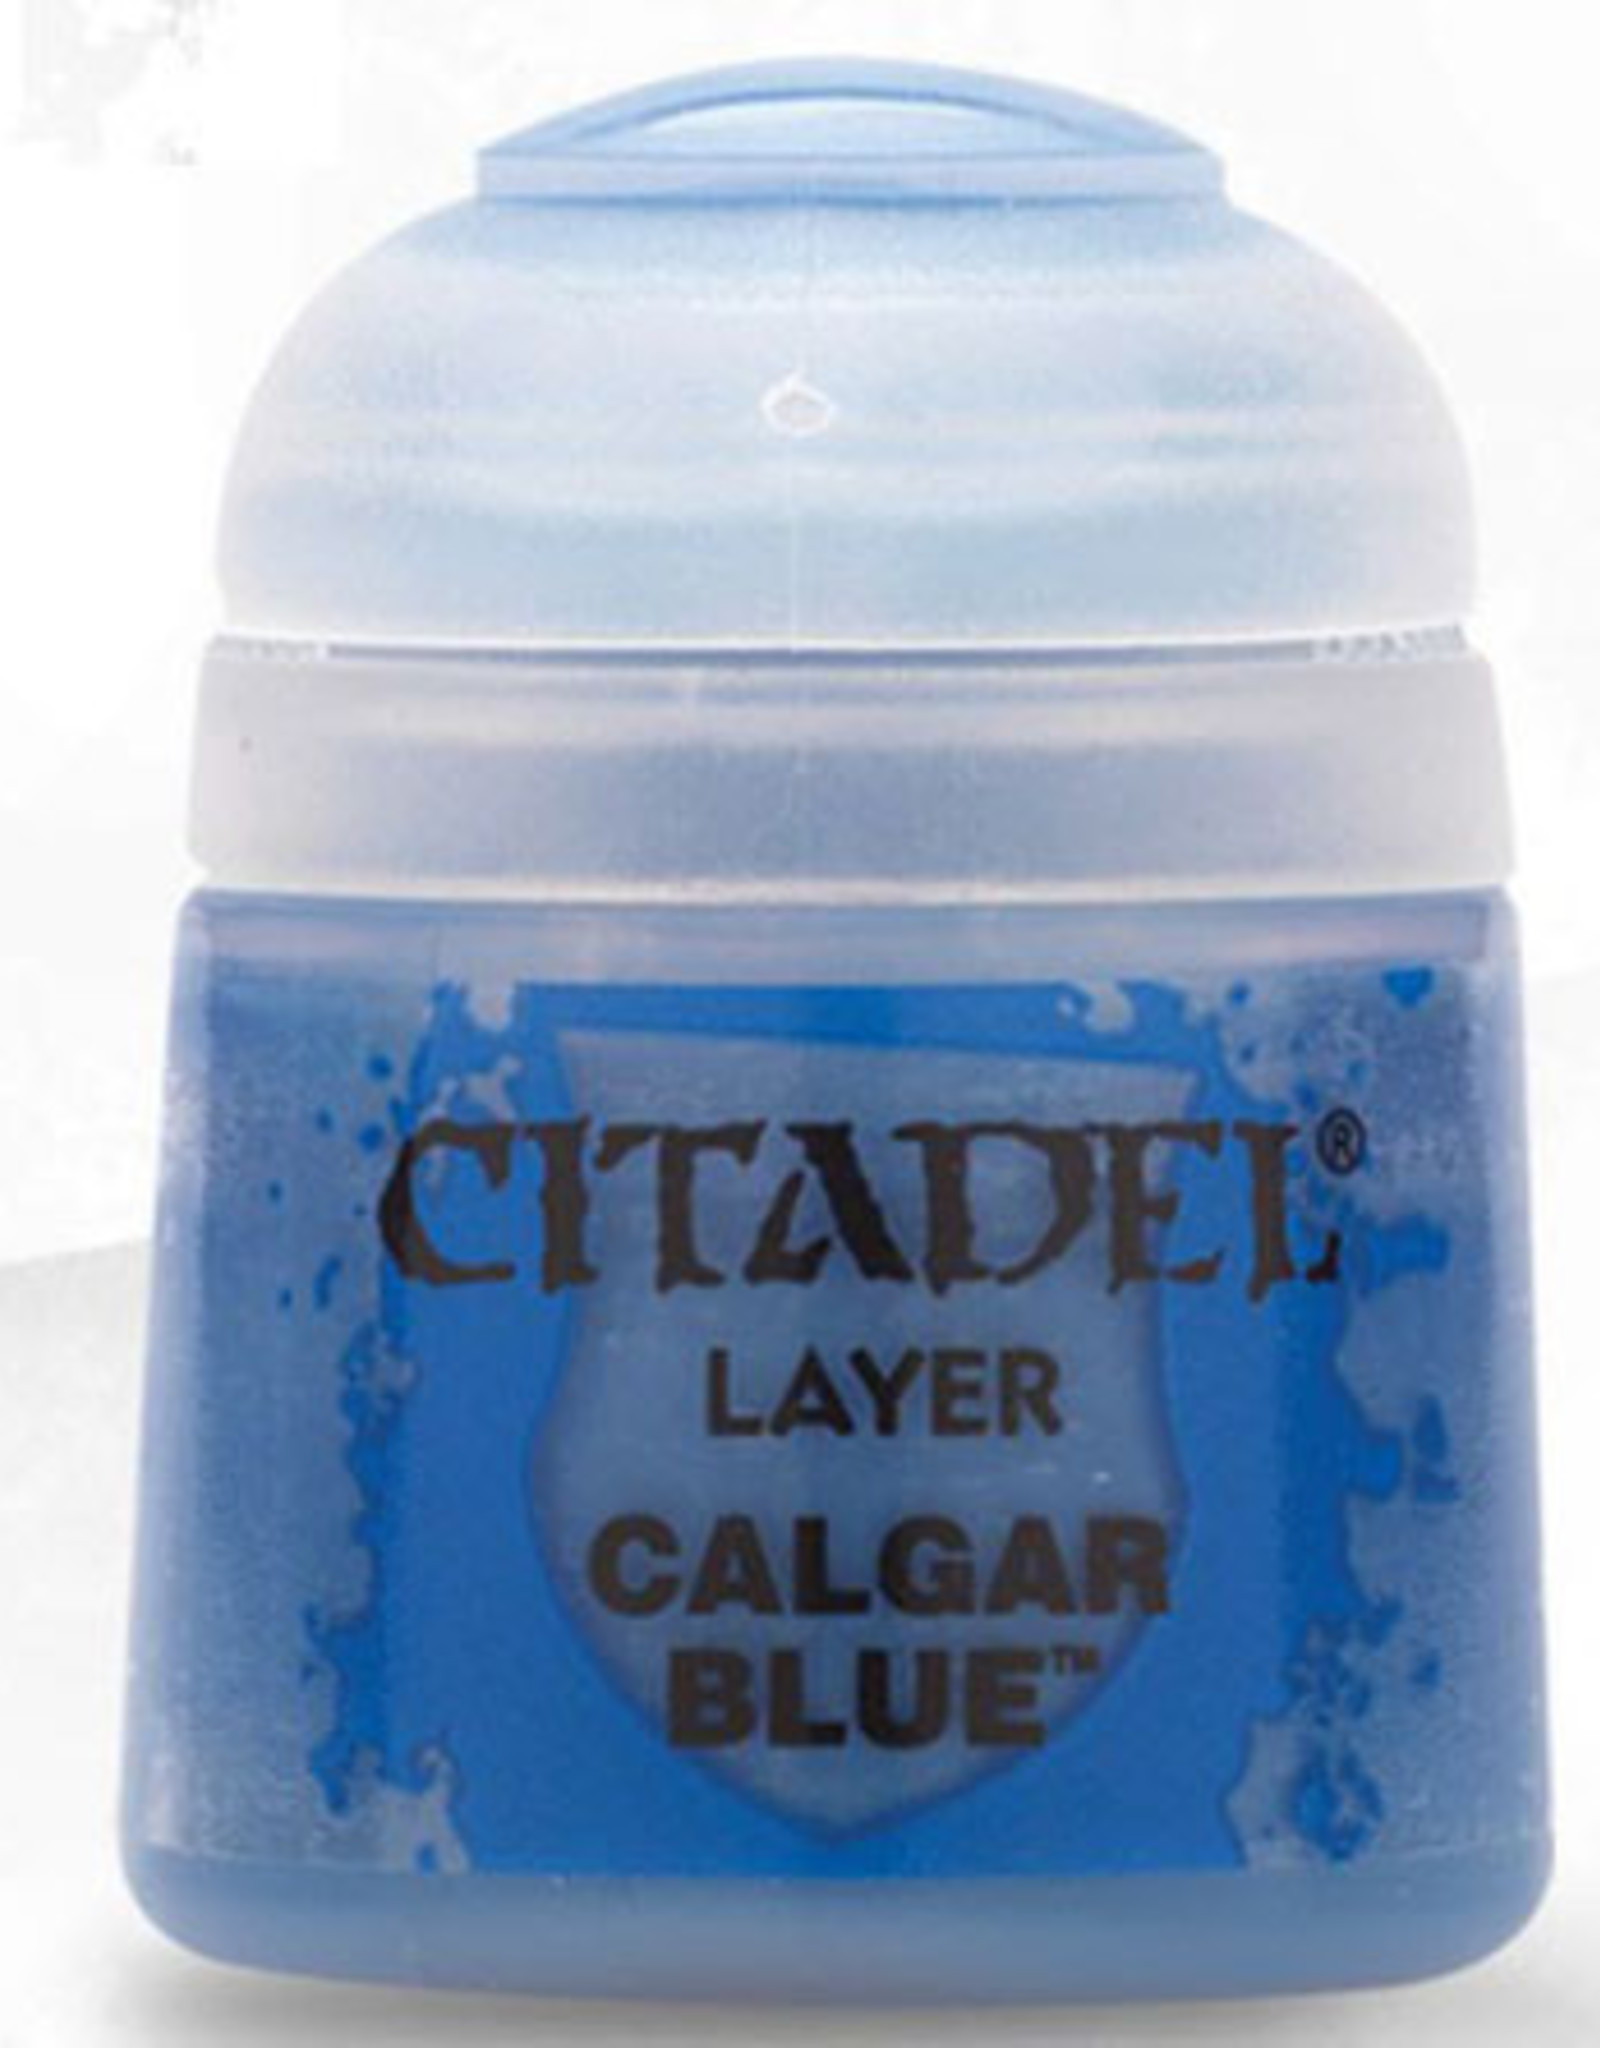 Games Workshop Citadel Layer: Calgar Blue